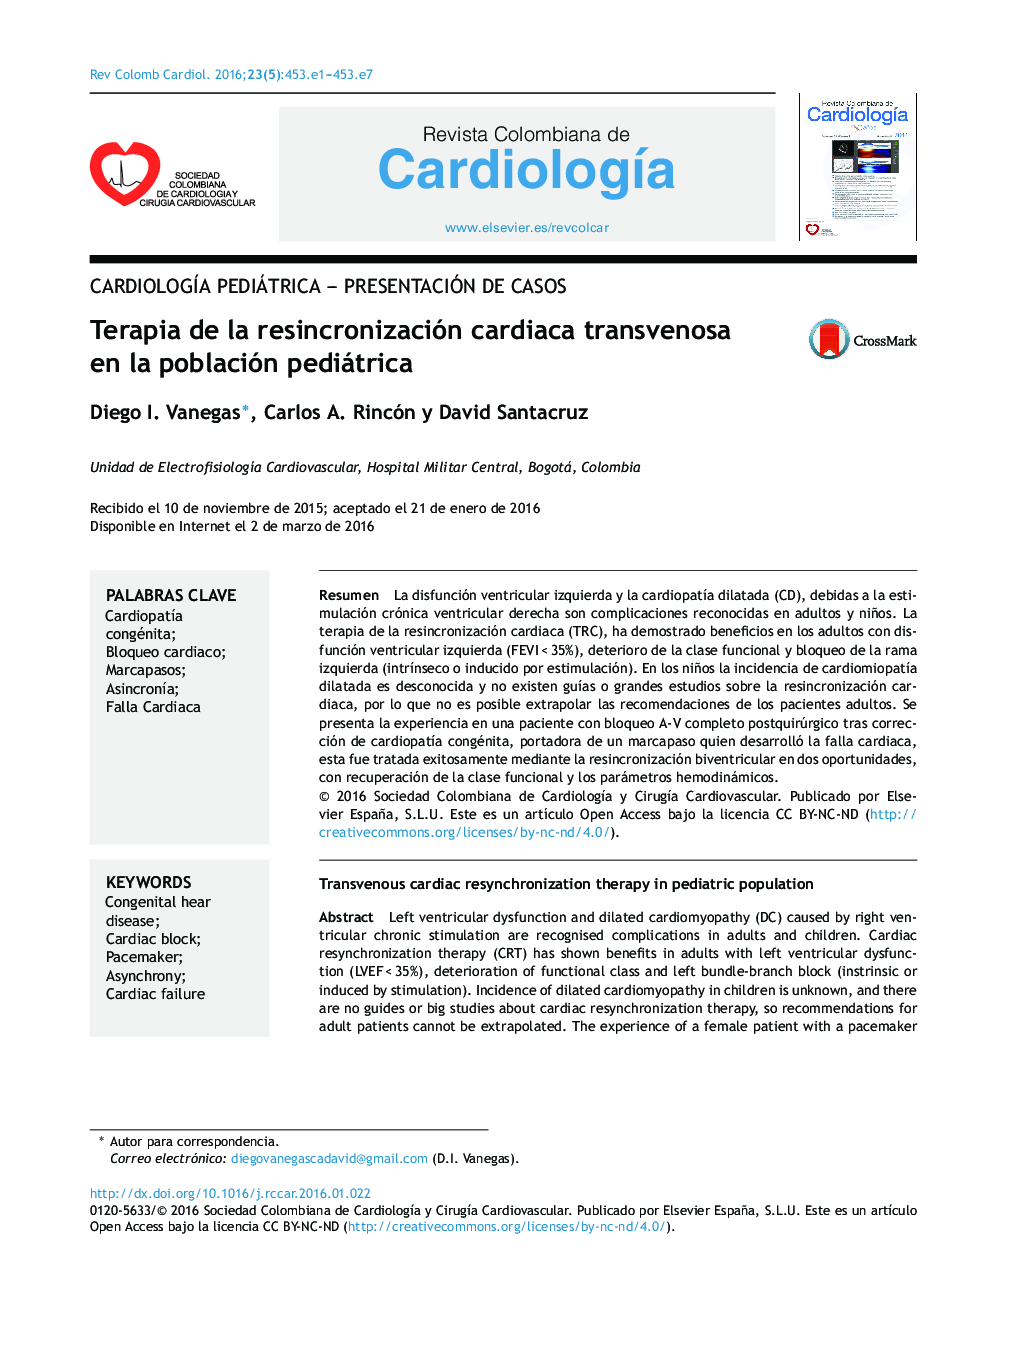 CardiologÃ­a pediátrica - Presentación de casosTerapia de la resincronización cardiaca transvenosa en la población pediátricaTransvenous cardiac resynchronization therapy in pediatric population